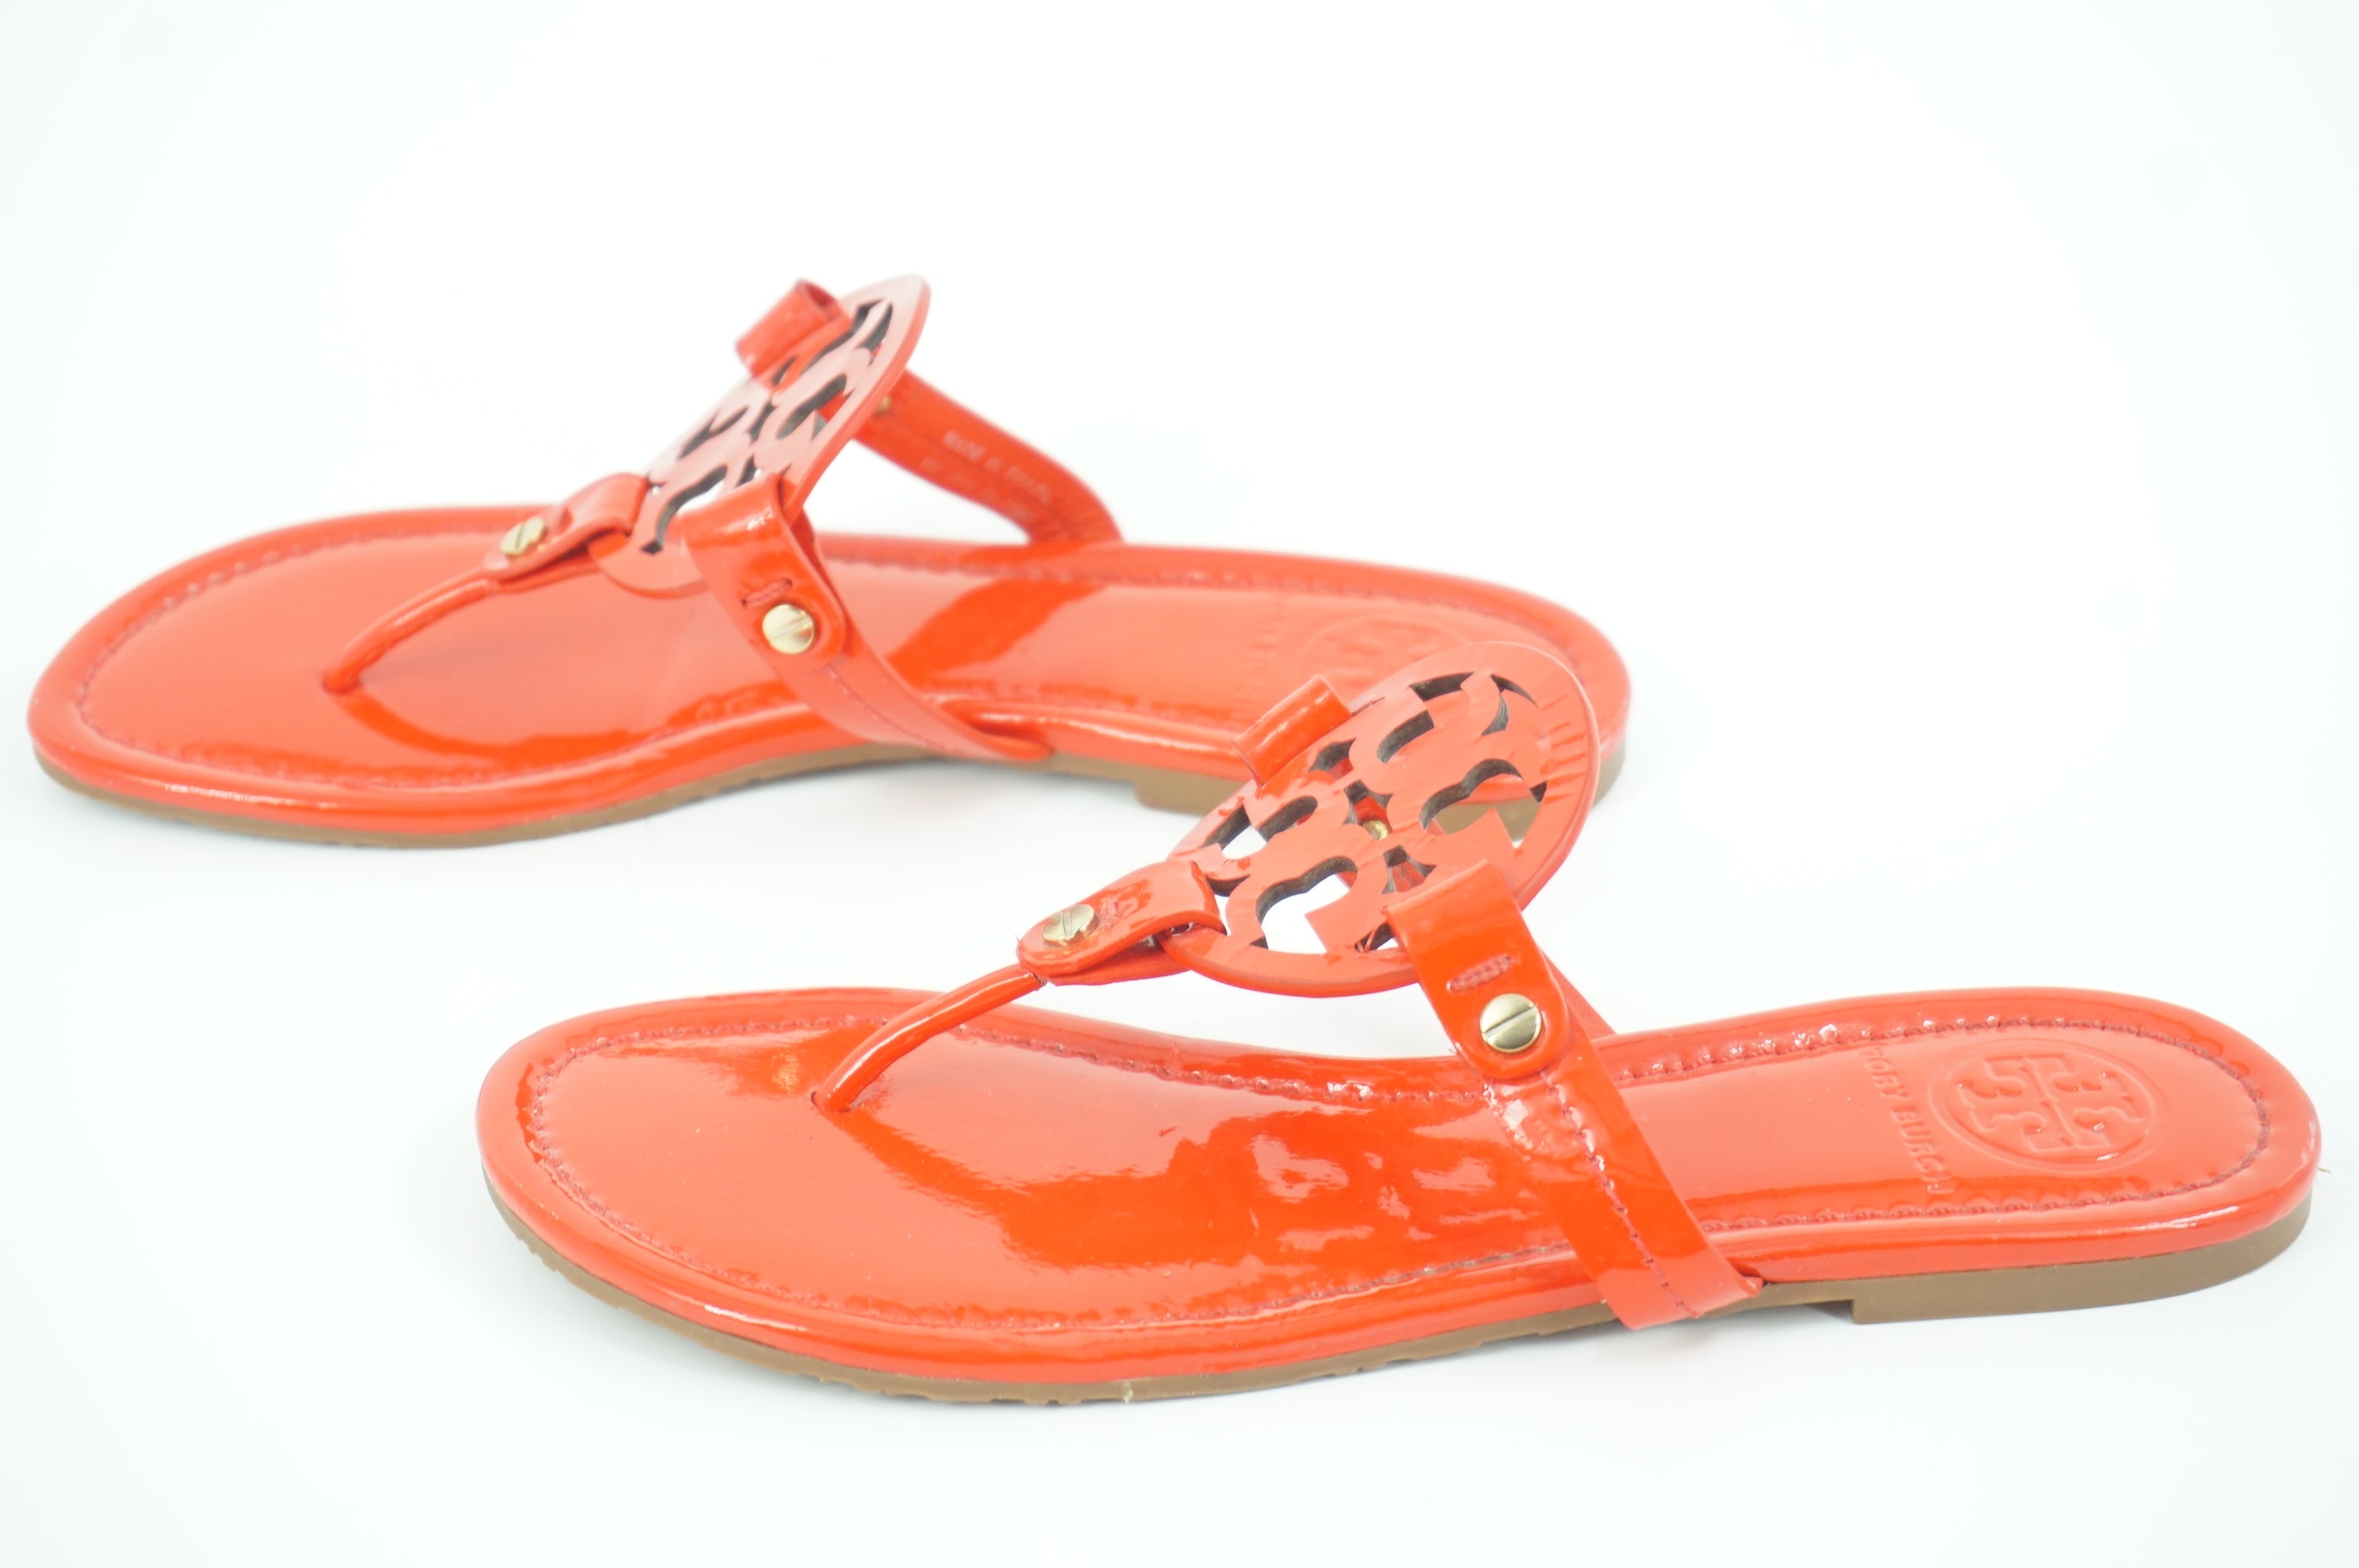 New Tory Burch Miller Poppy Red Patent Thong Sandals SZ 7.5 $235 Logo